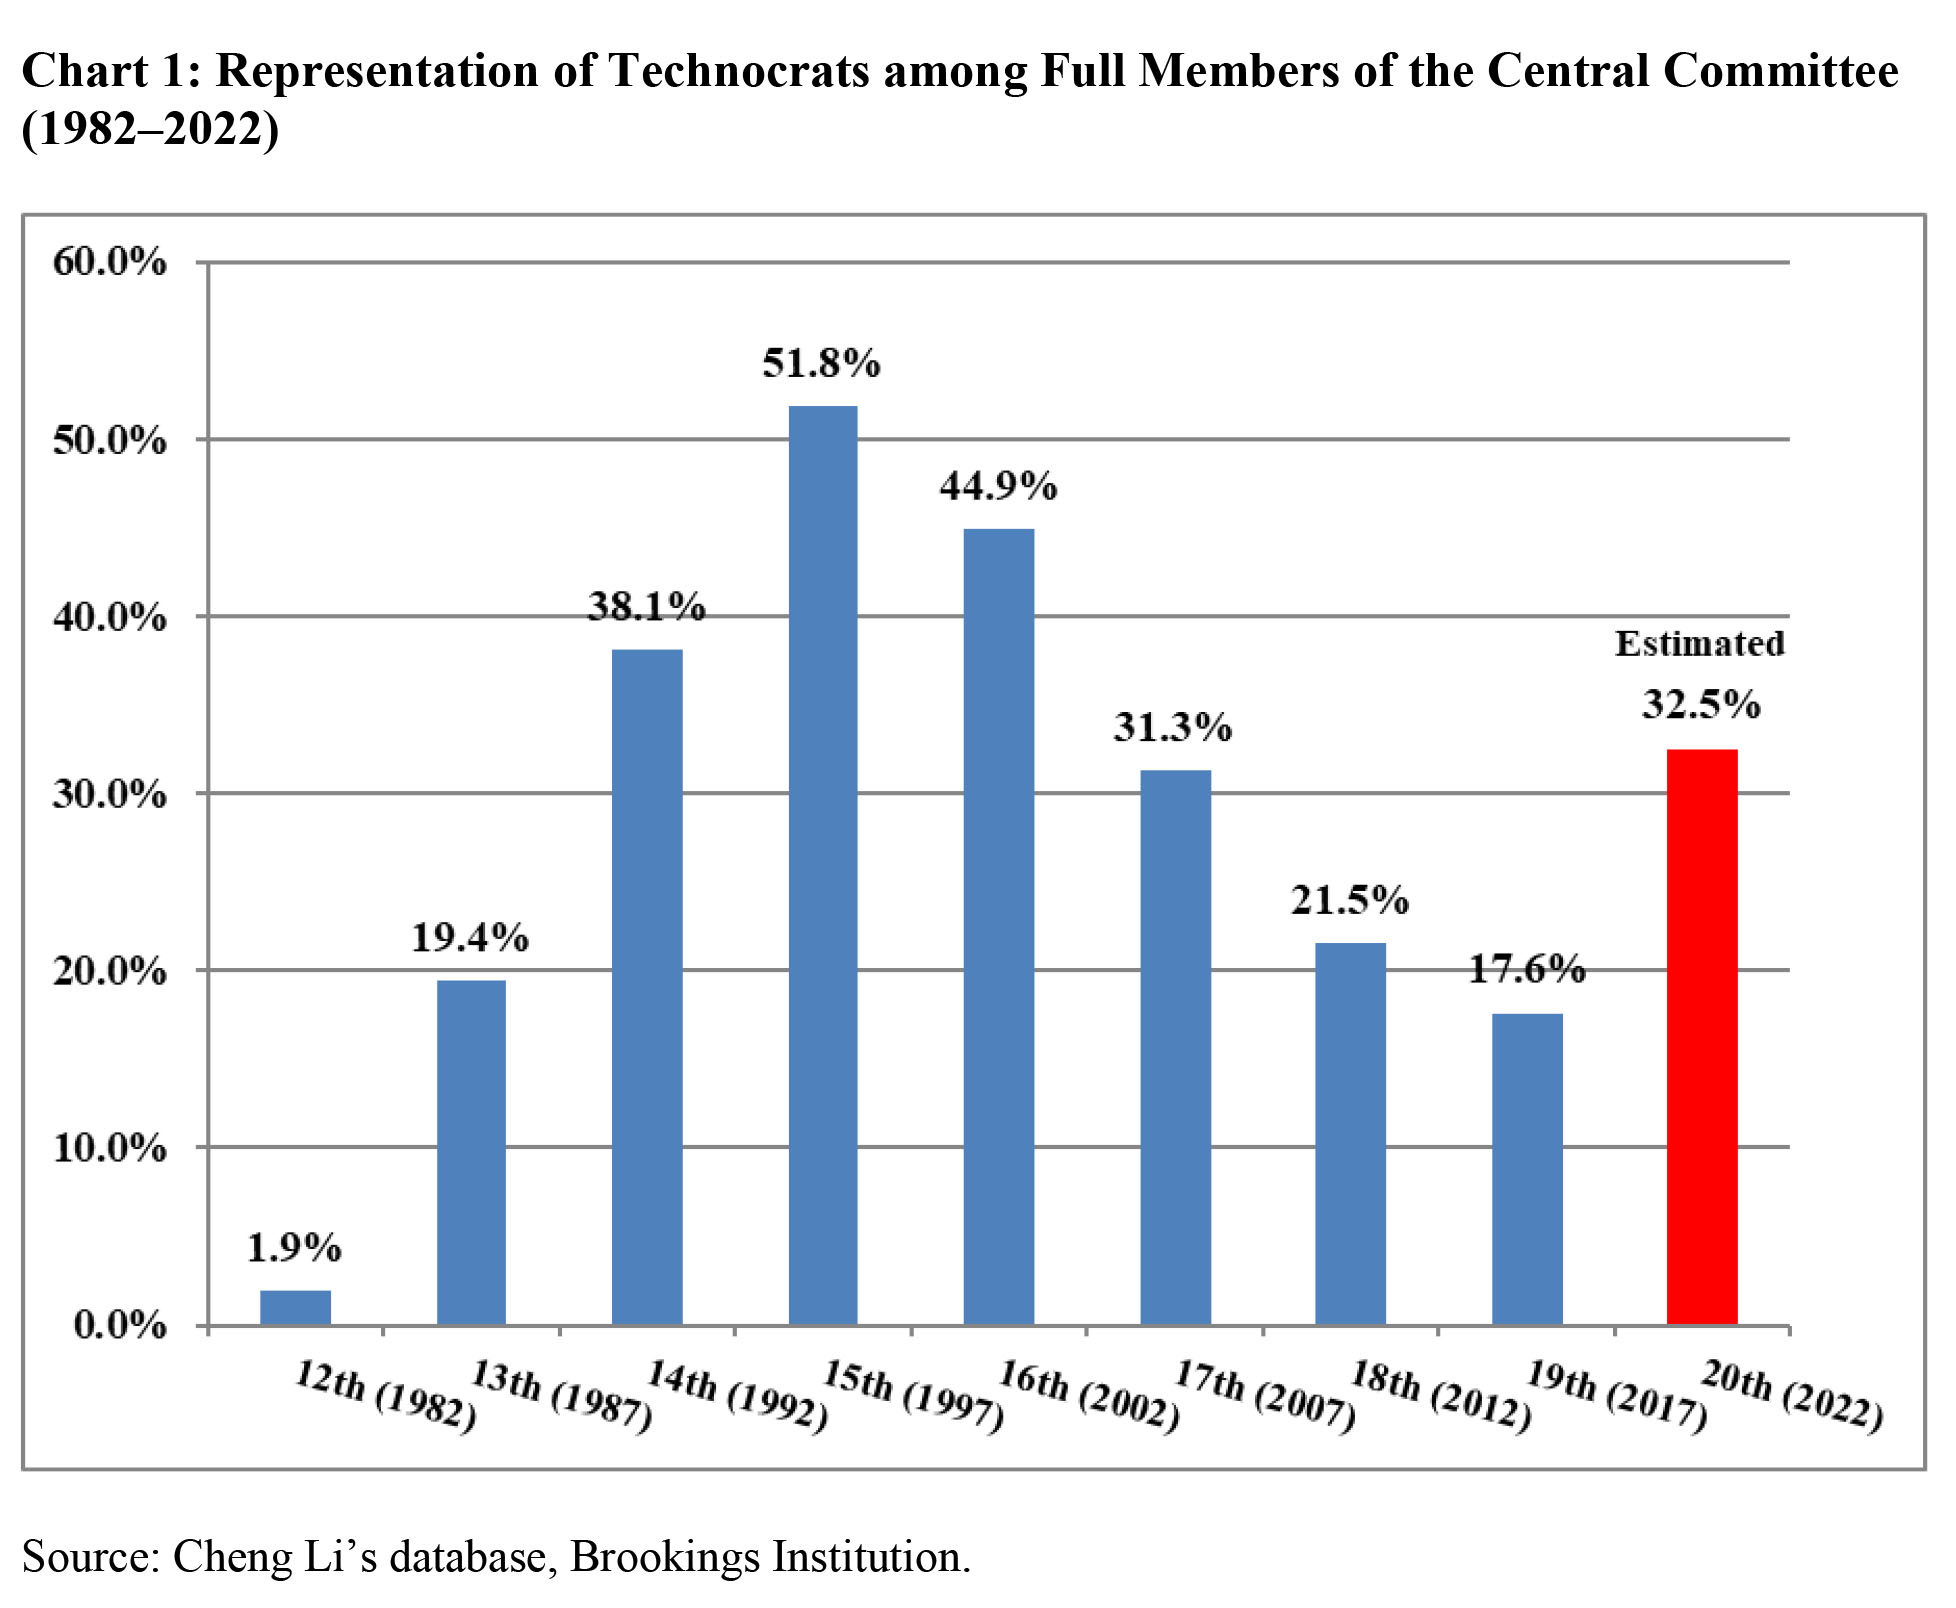 RR18 Chart 1 Technorats' representation in CC Final.jpg